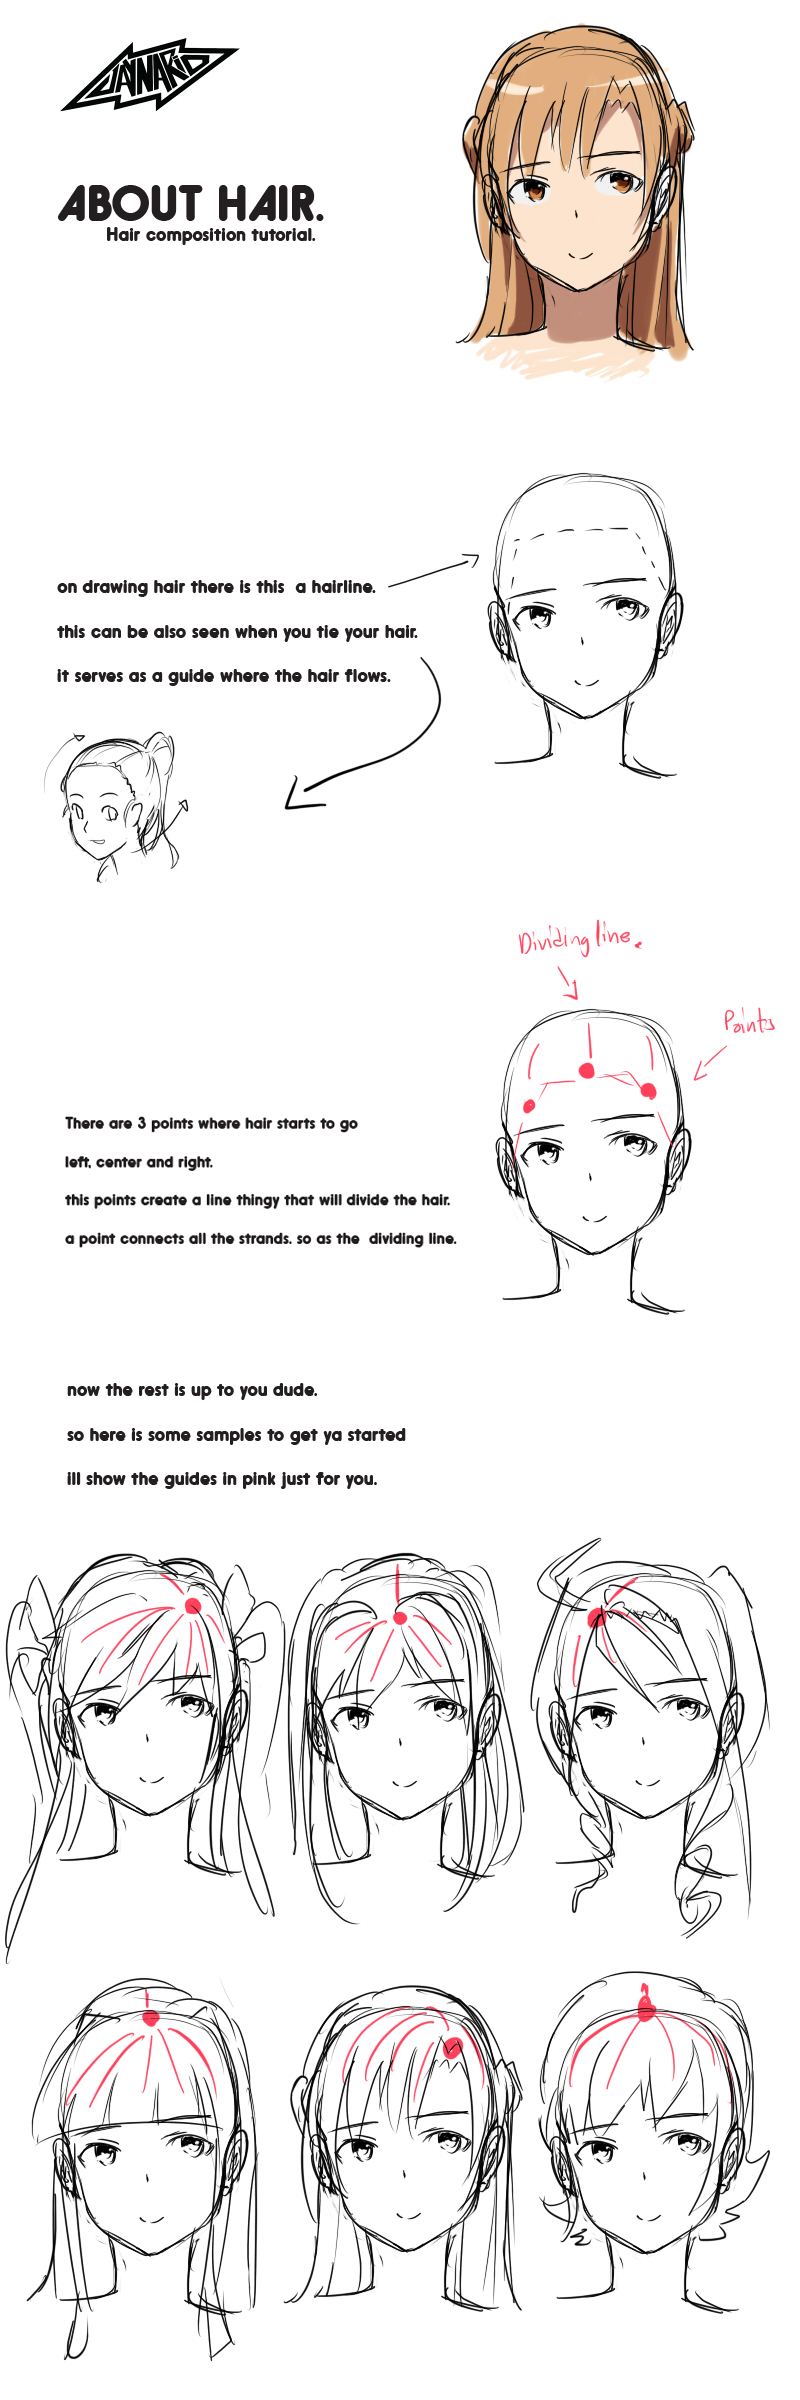 About Hair. manga hair composition tutorial